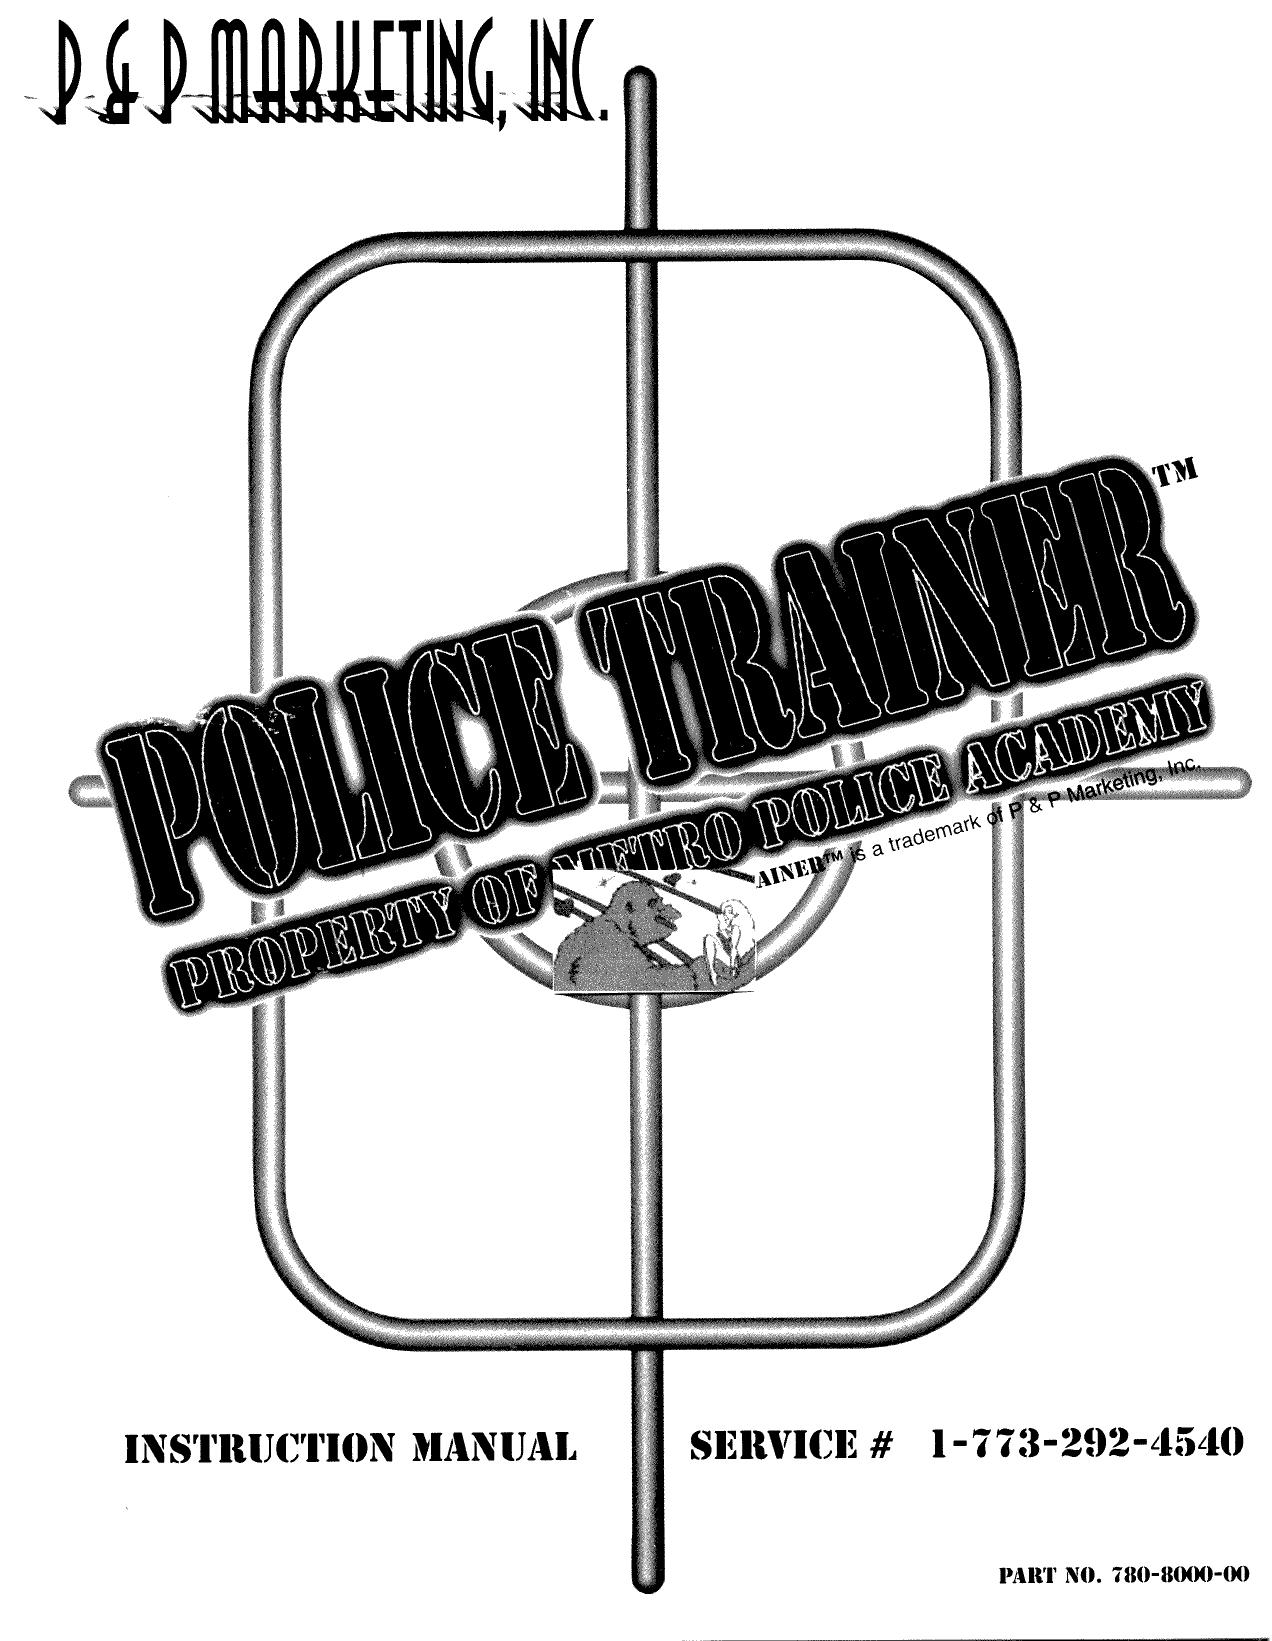 Police Trainer.man